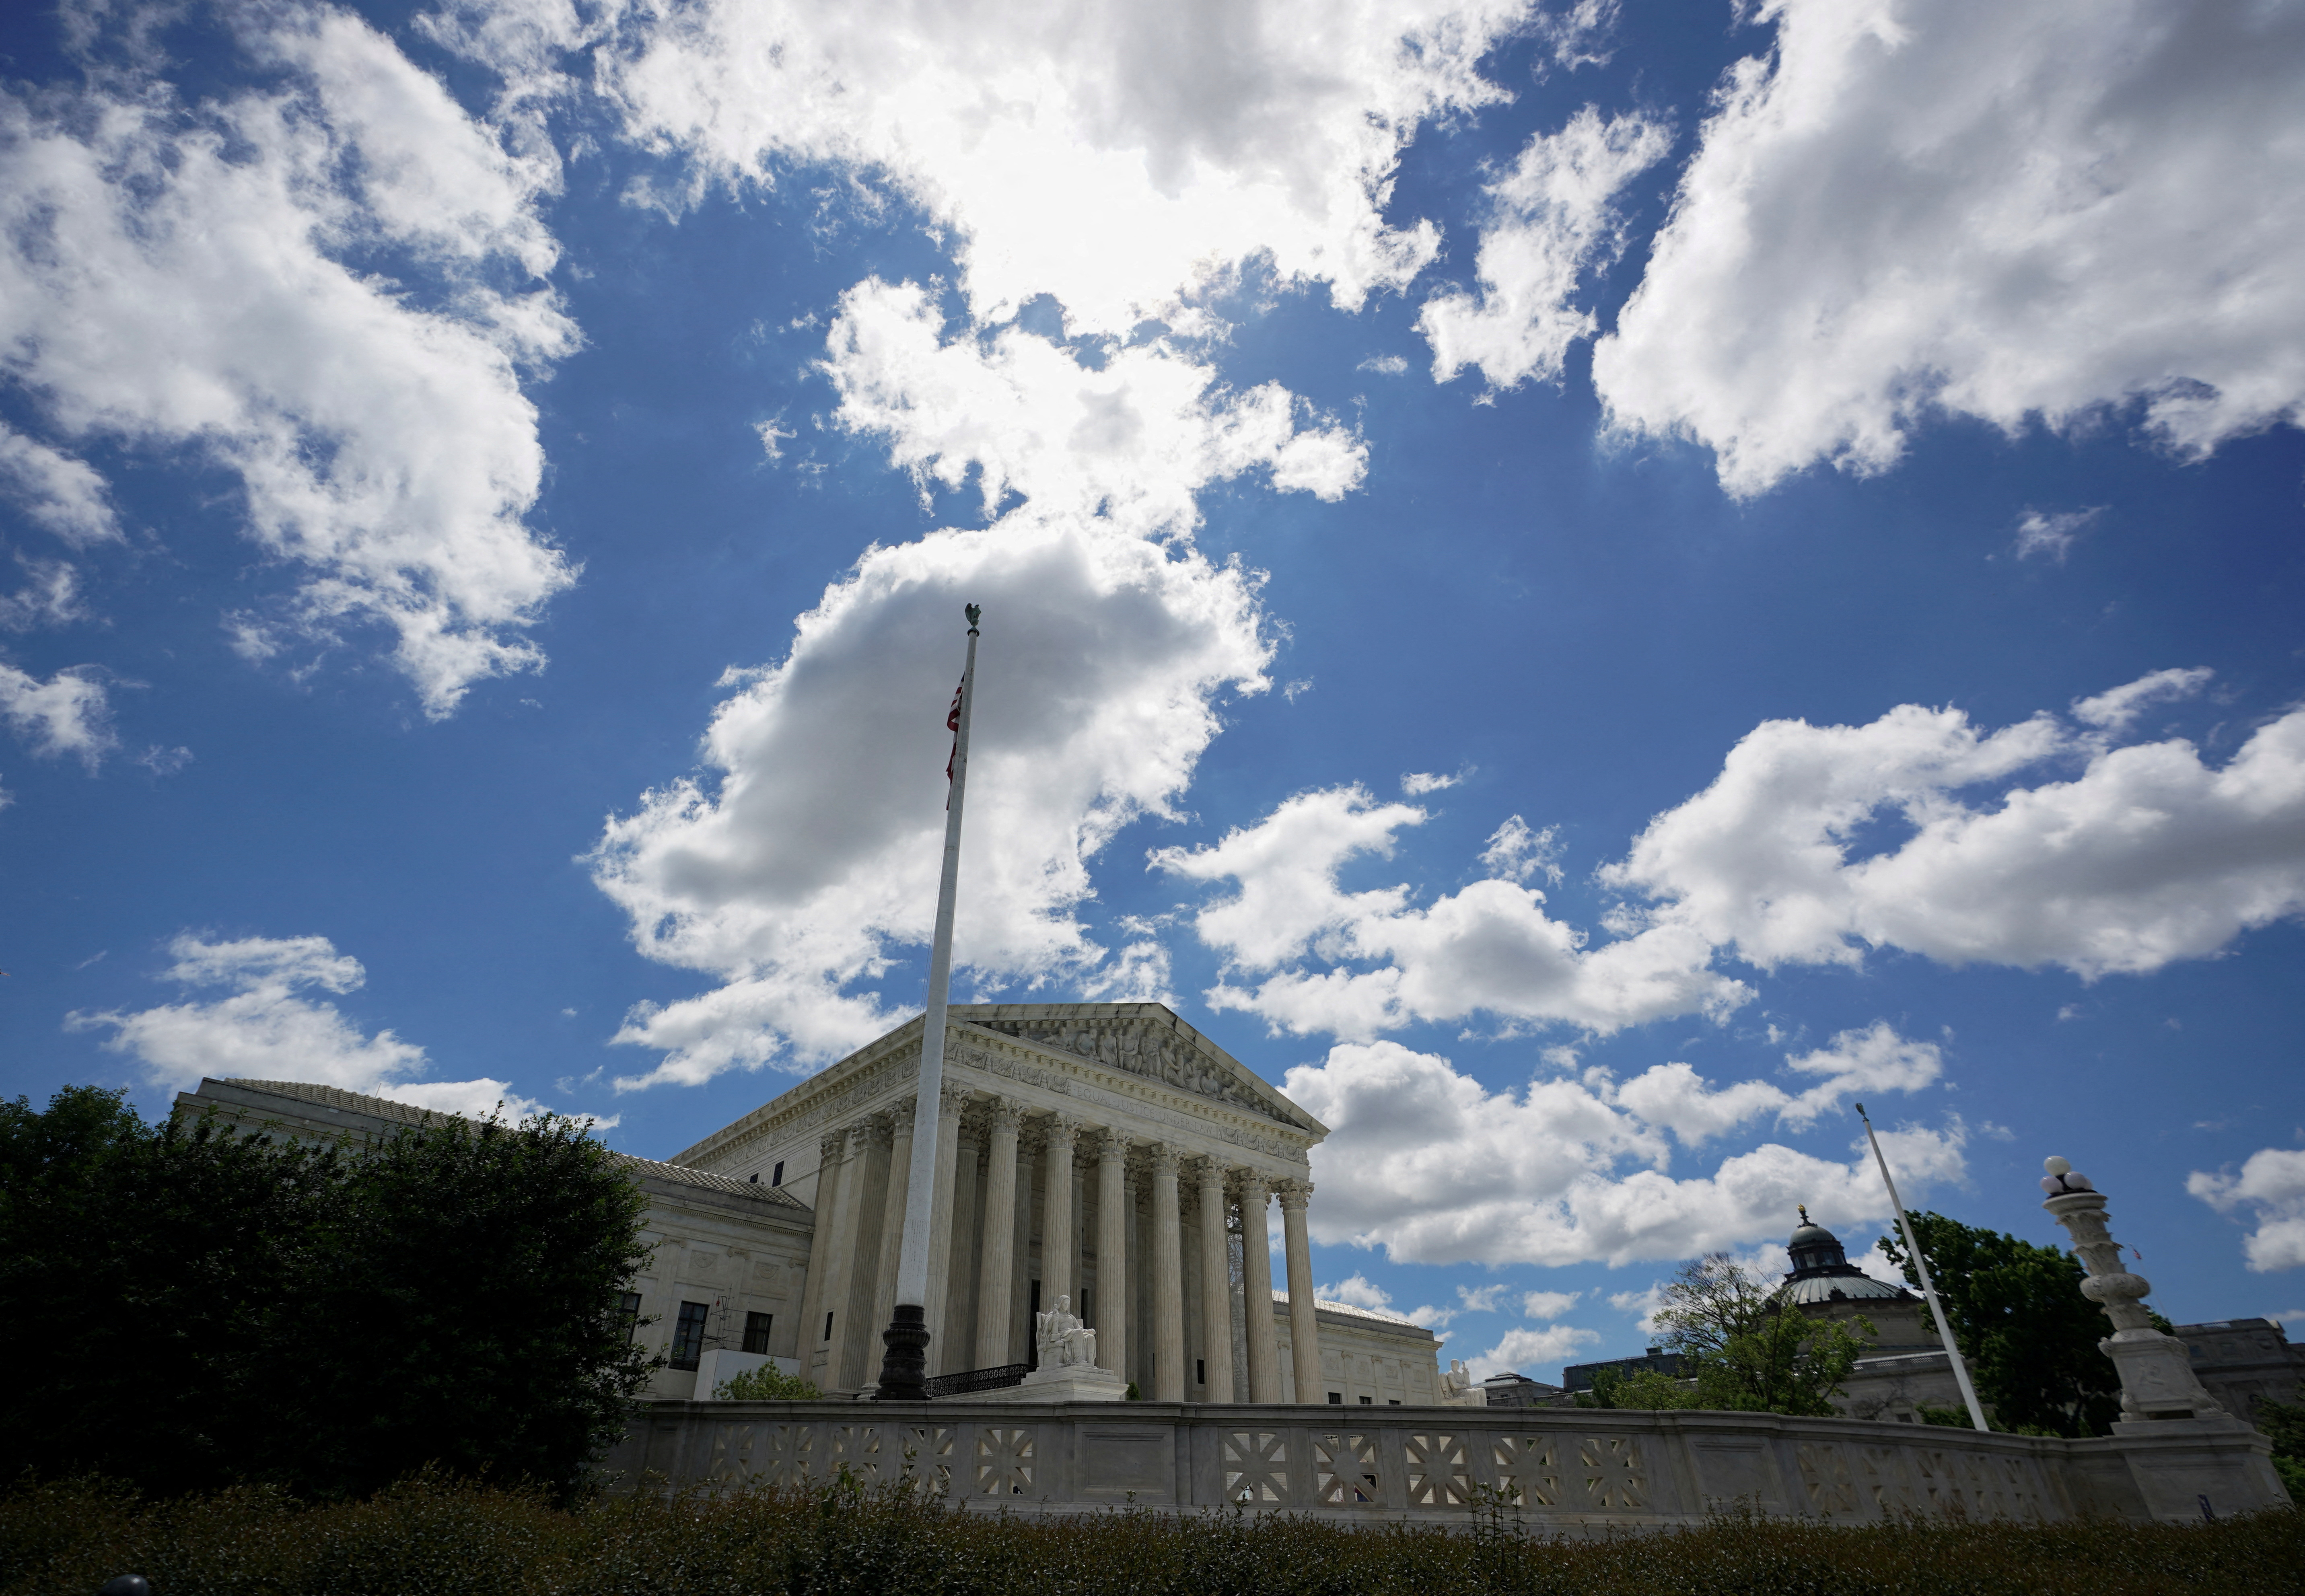 Clouds above the U.S. Supreme Court in Washington